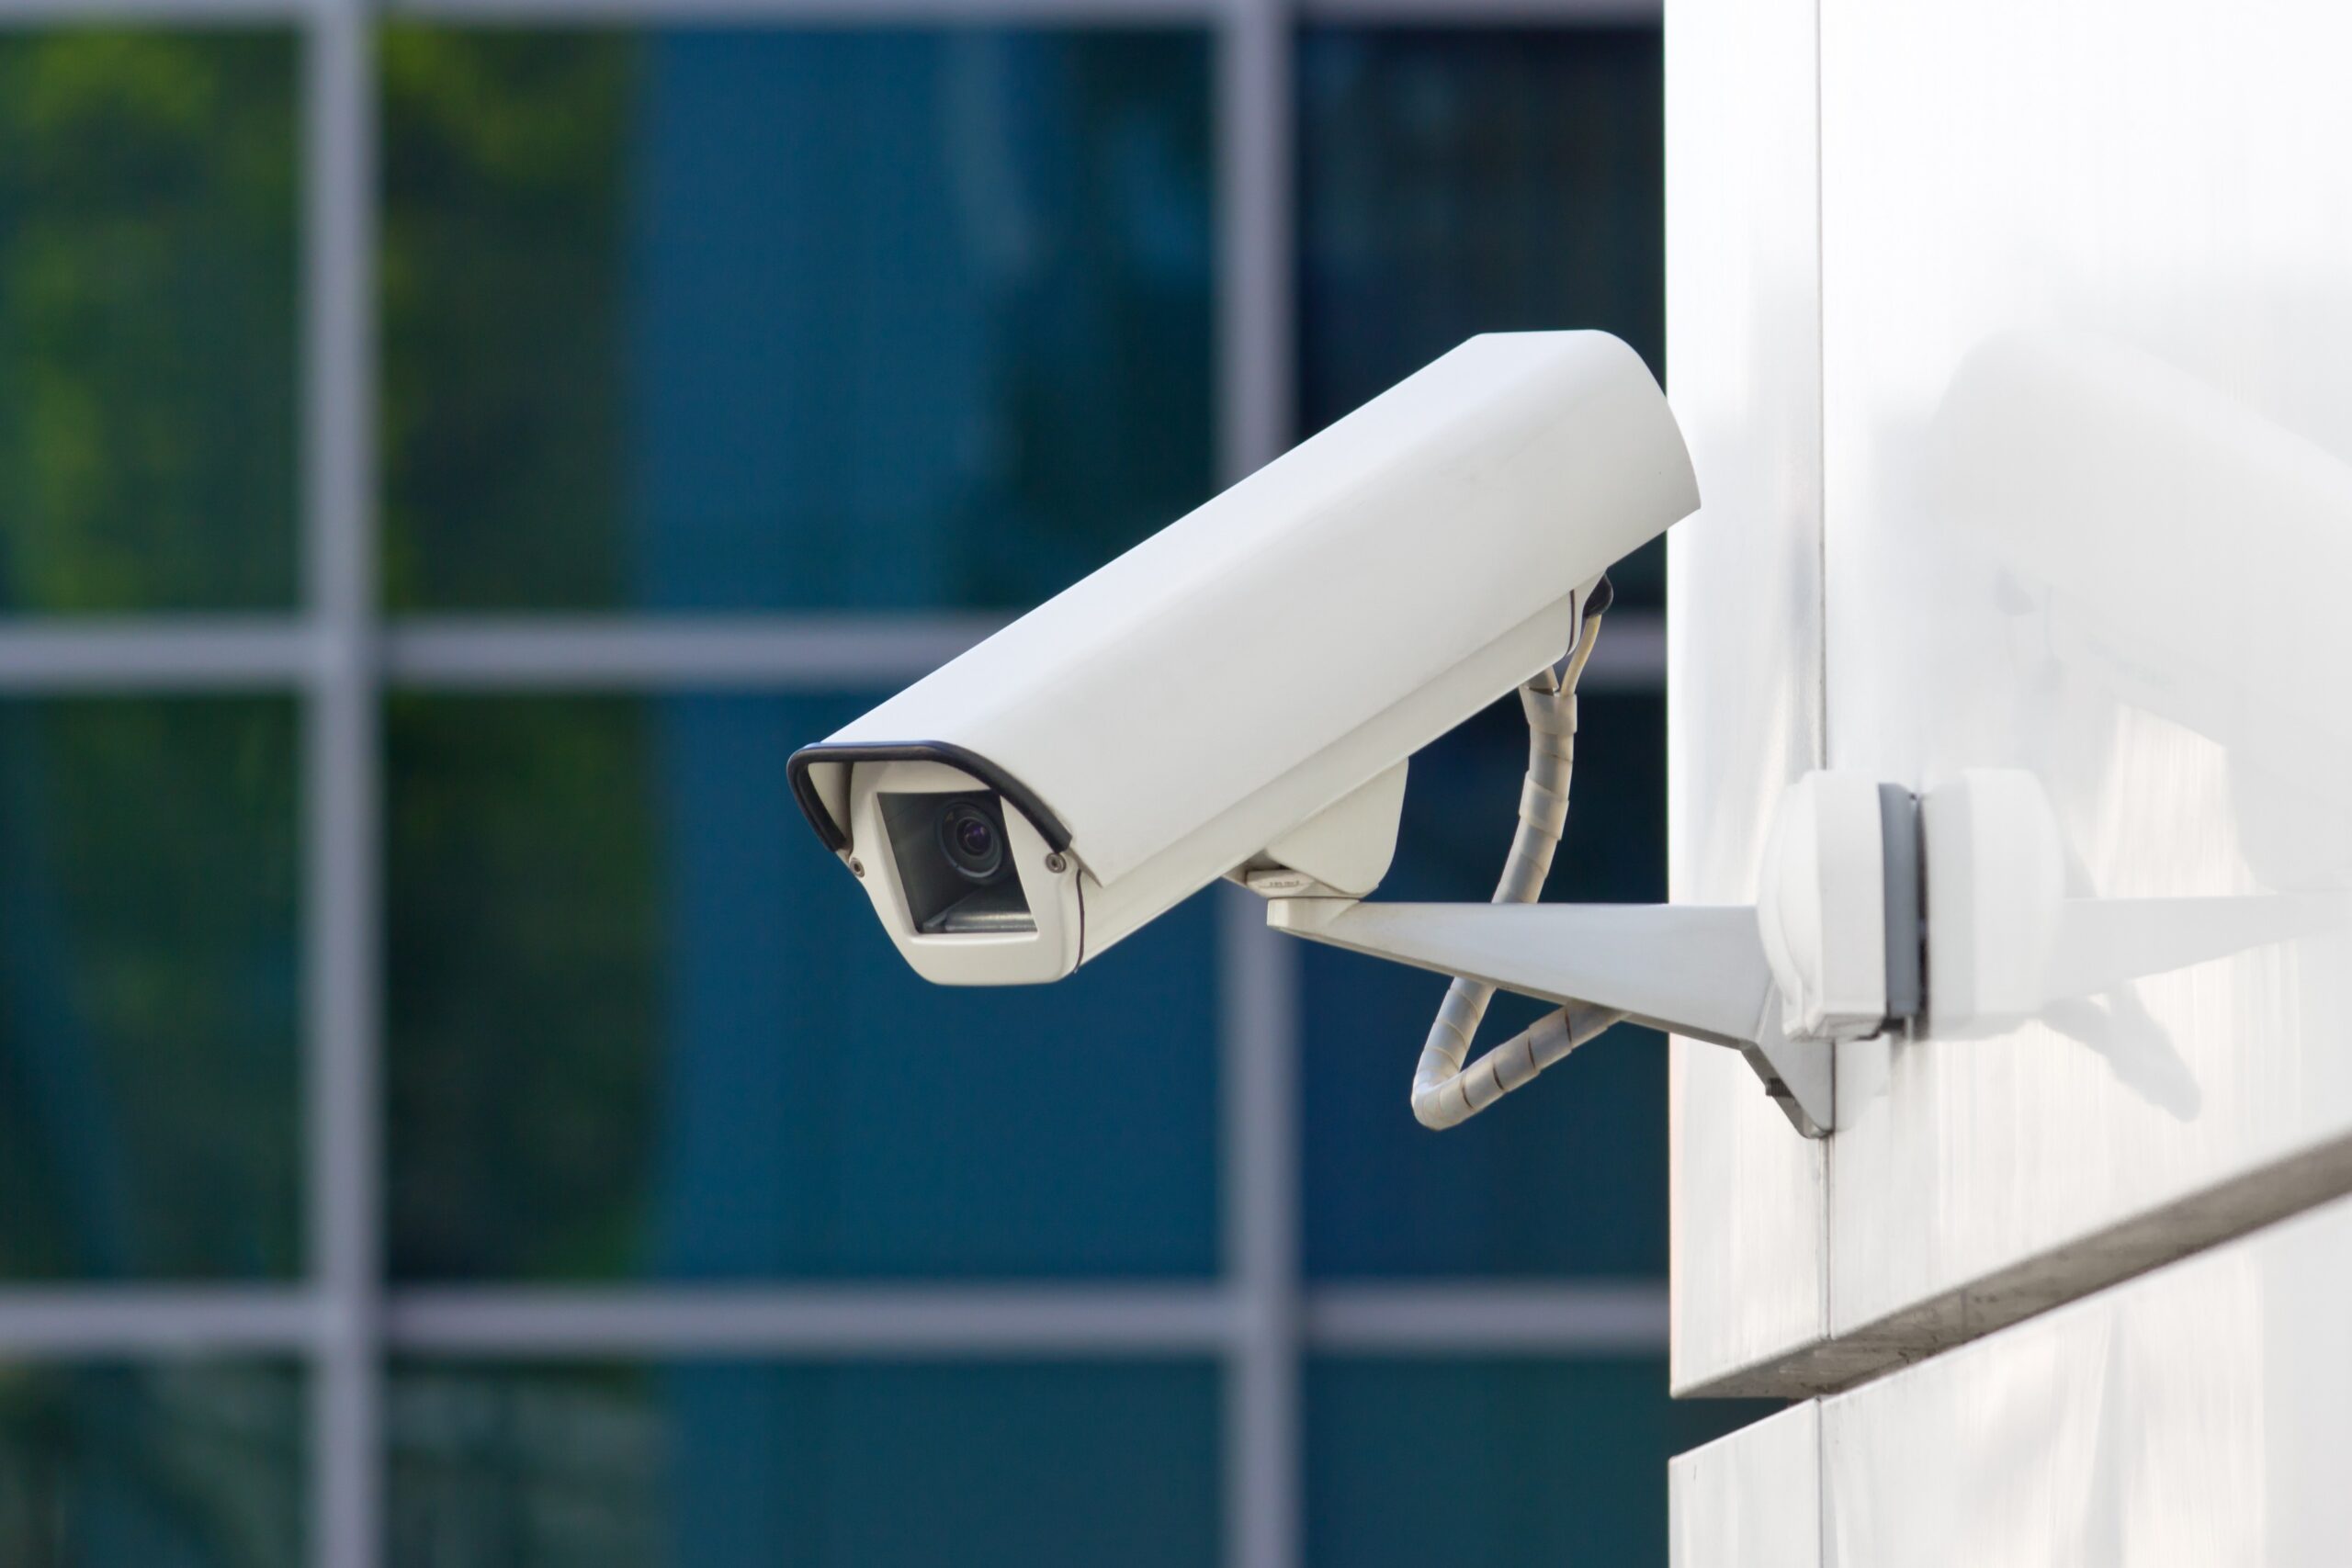 Surveilance camera on a building